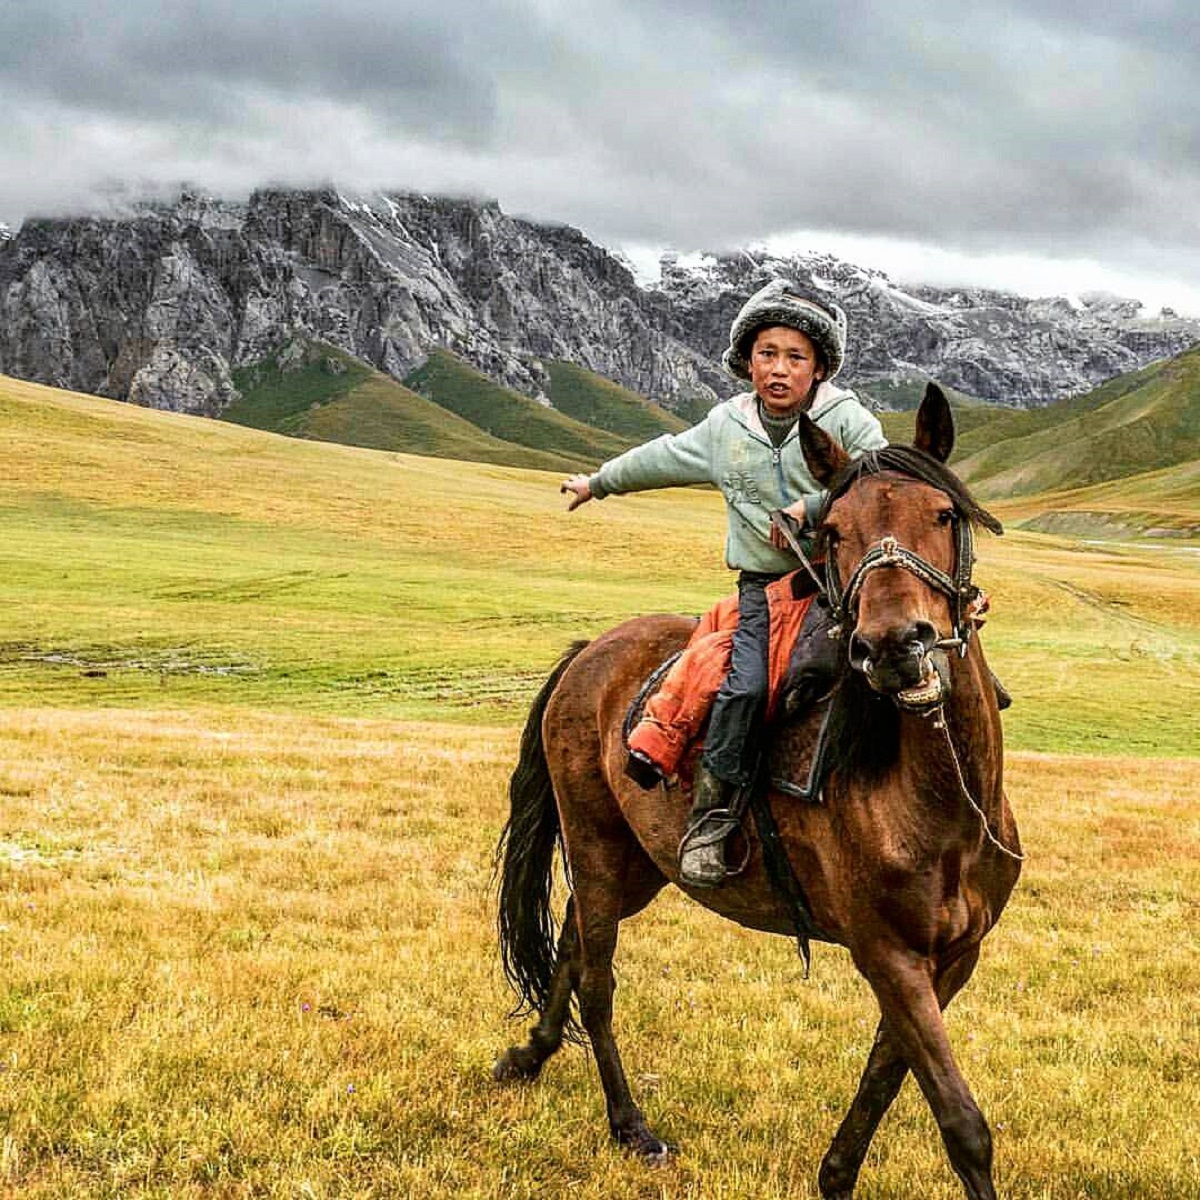 Киргизия или кыргызстан. Кыргызстан люди. Киргизия киргизы. Фото из Киргизии. Красивые дети Кыргызстана.